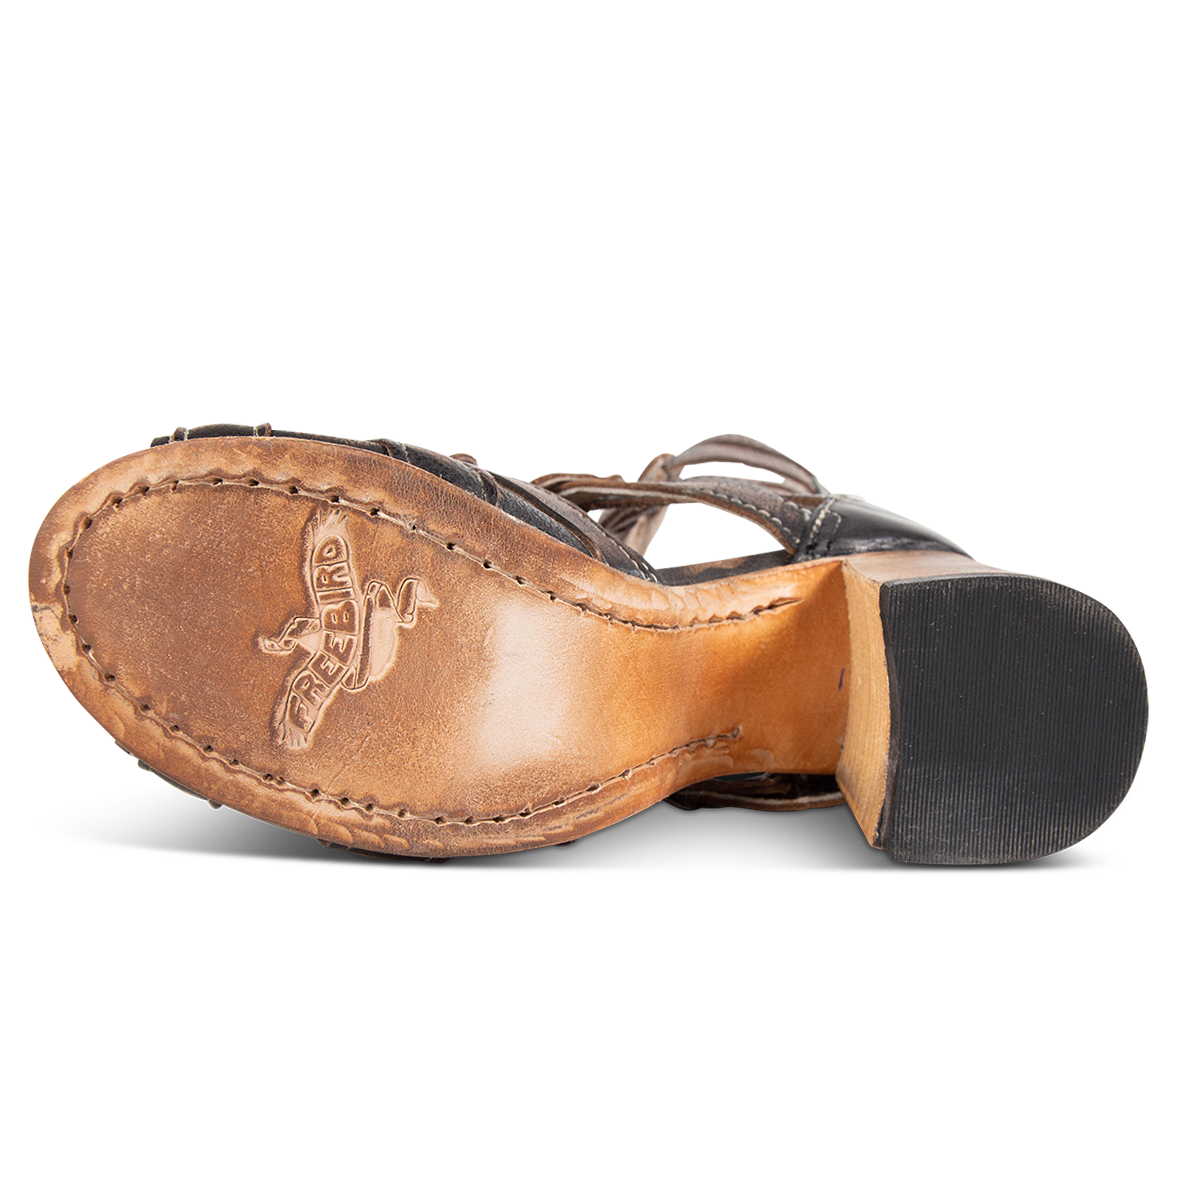 Leather sole on FREEBIRD women's Zane black heeled sandal